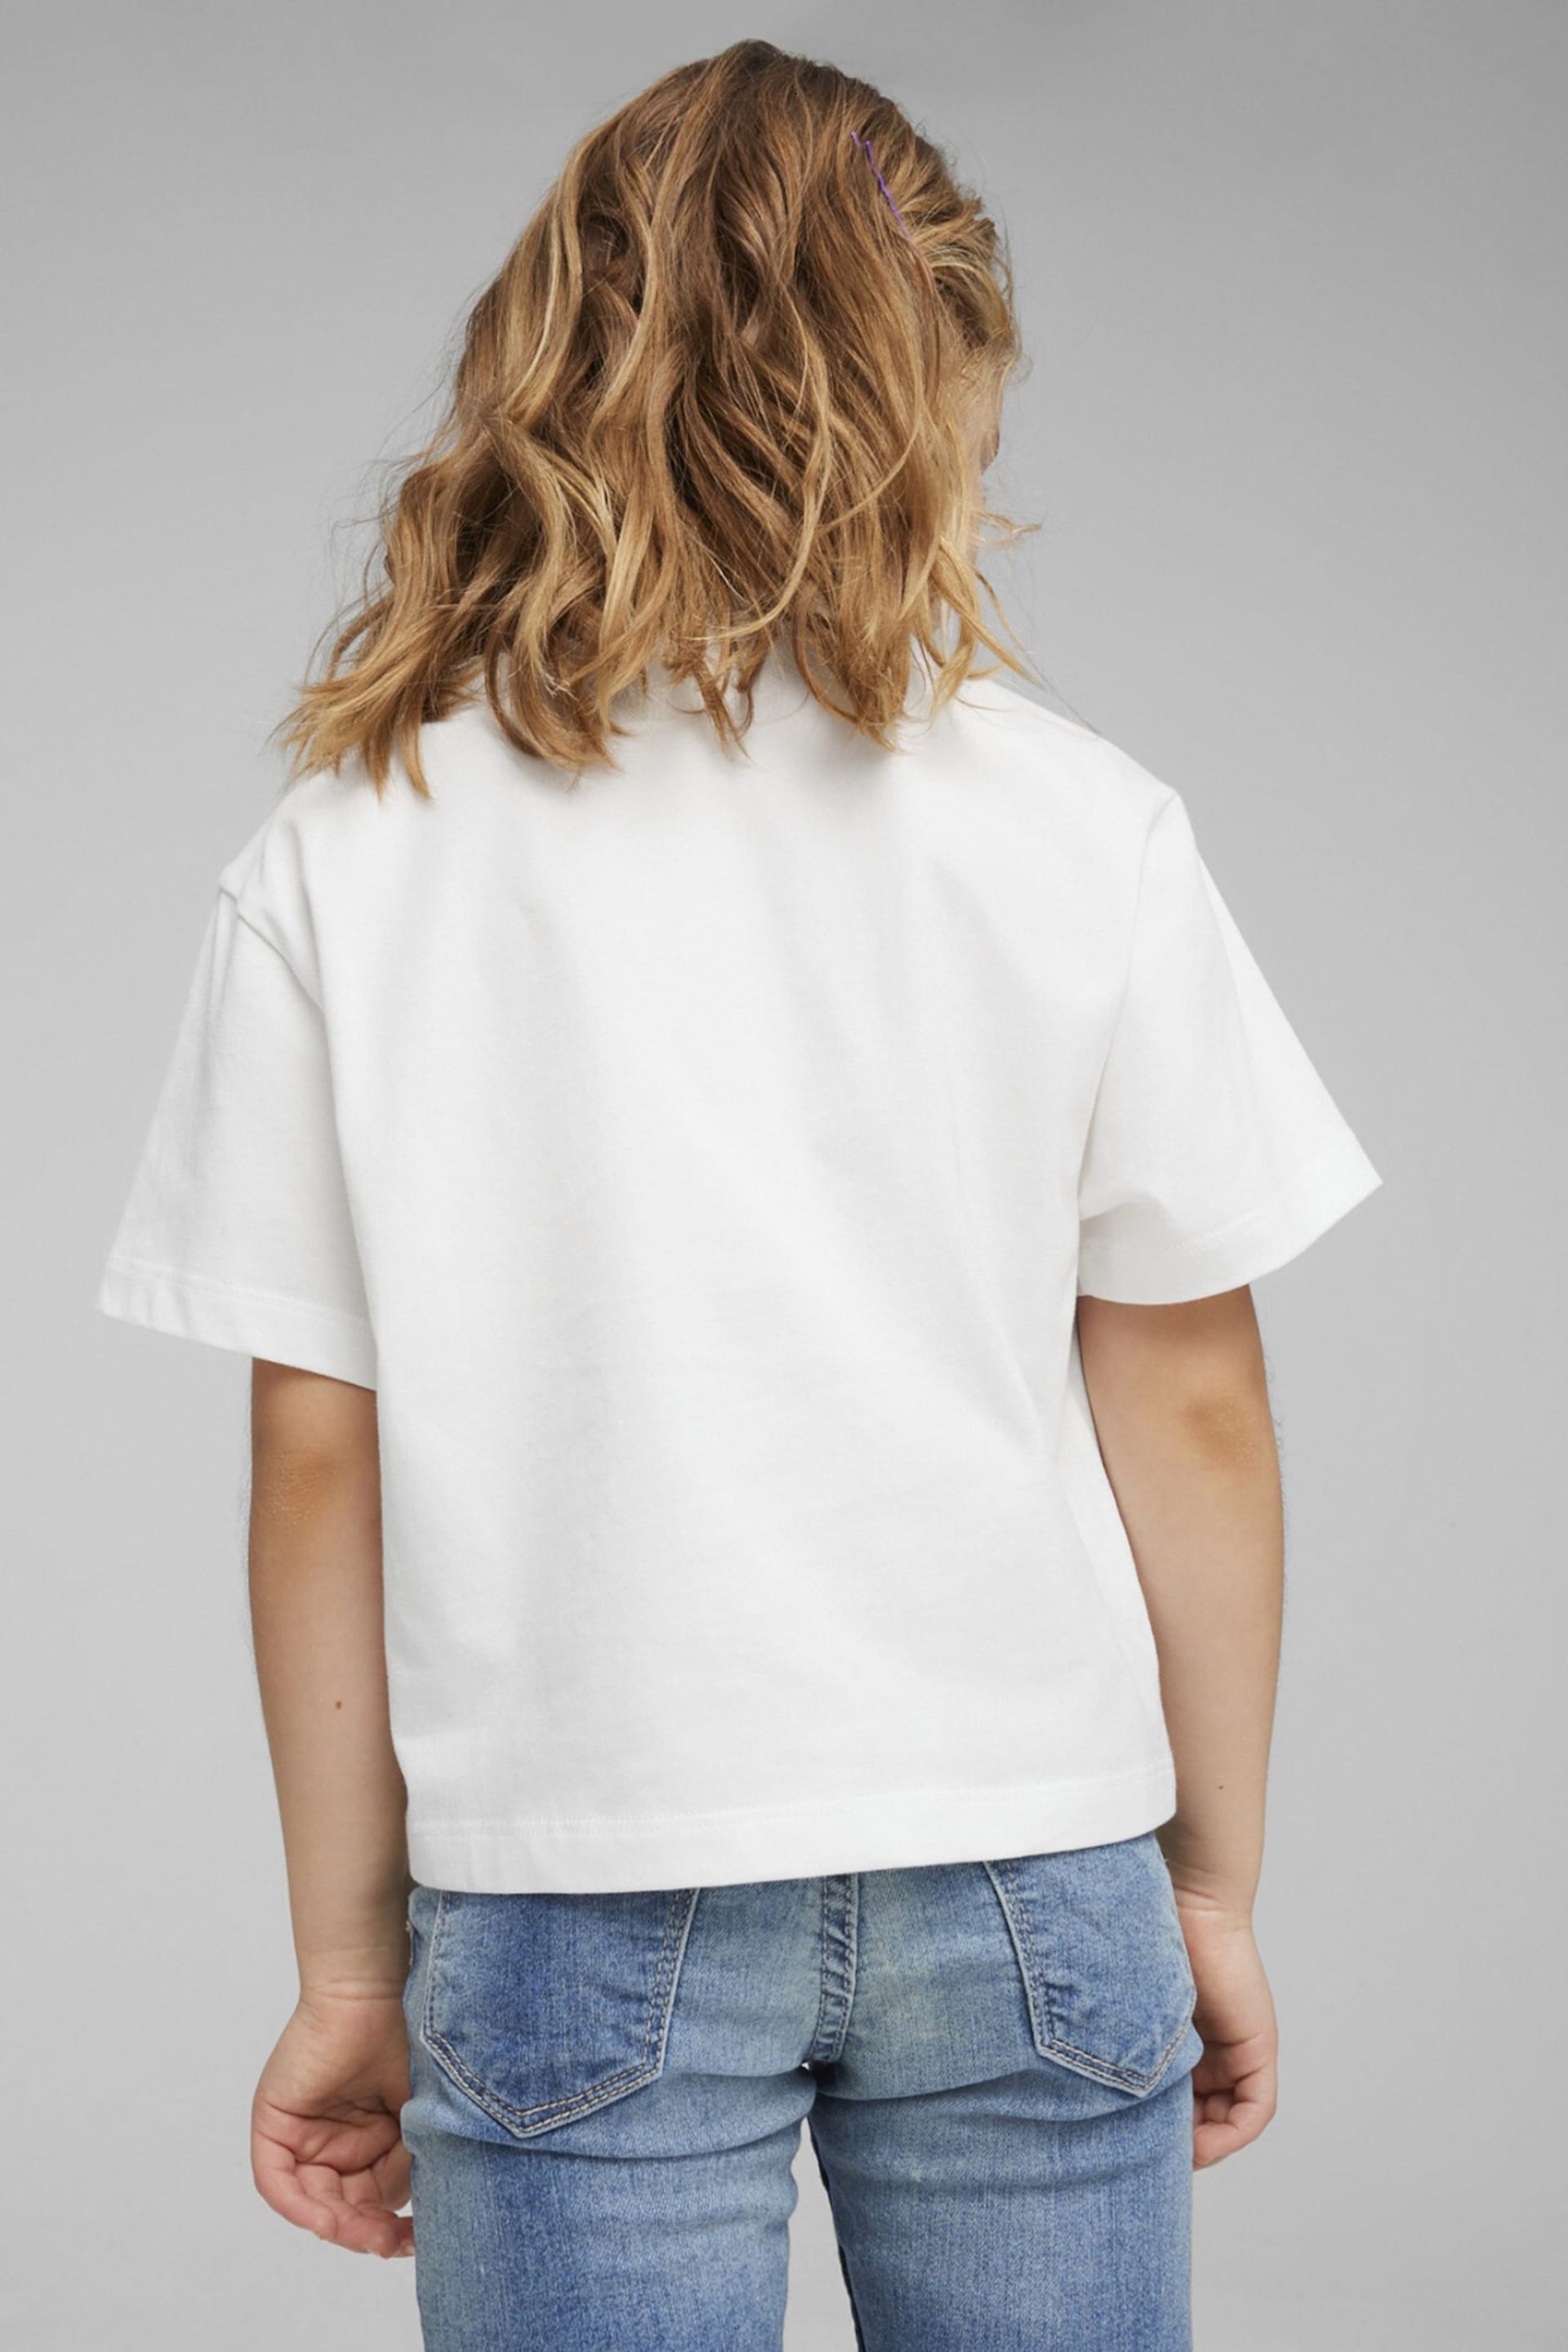 Puma White Kids Girls x TROLLS Graphic T-Shirt - Image 2 of 5